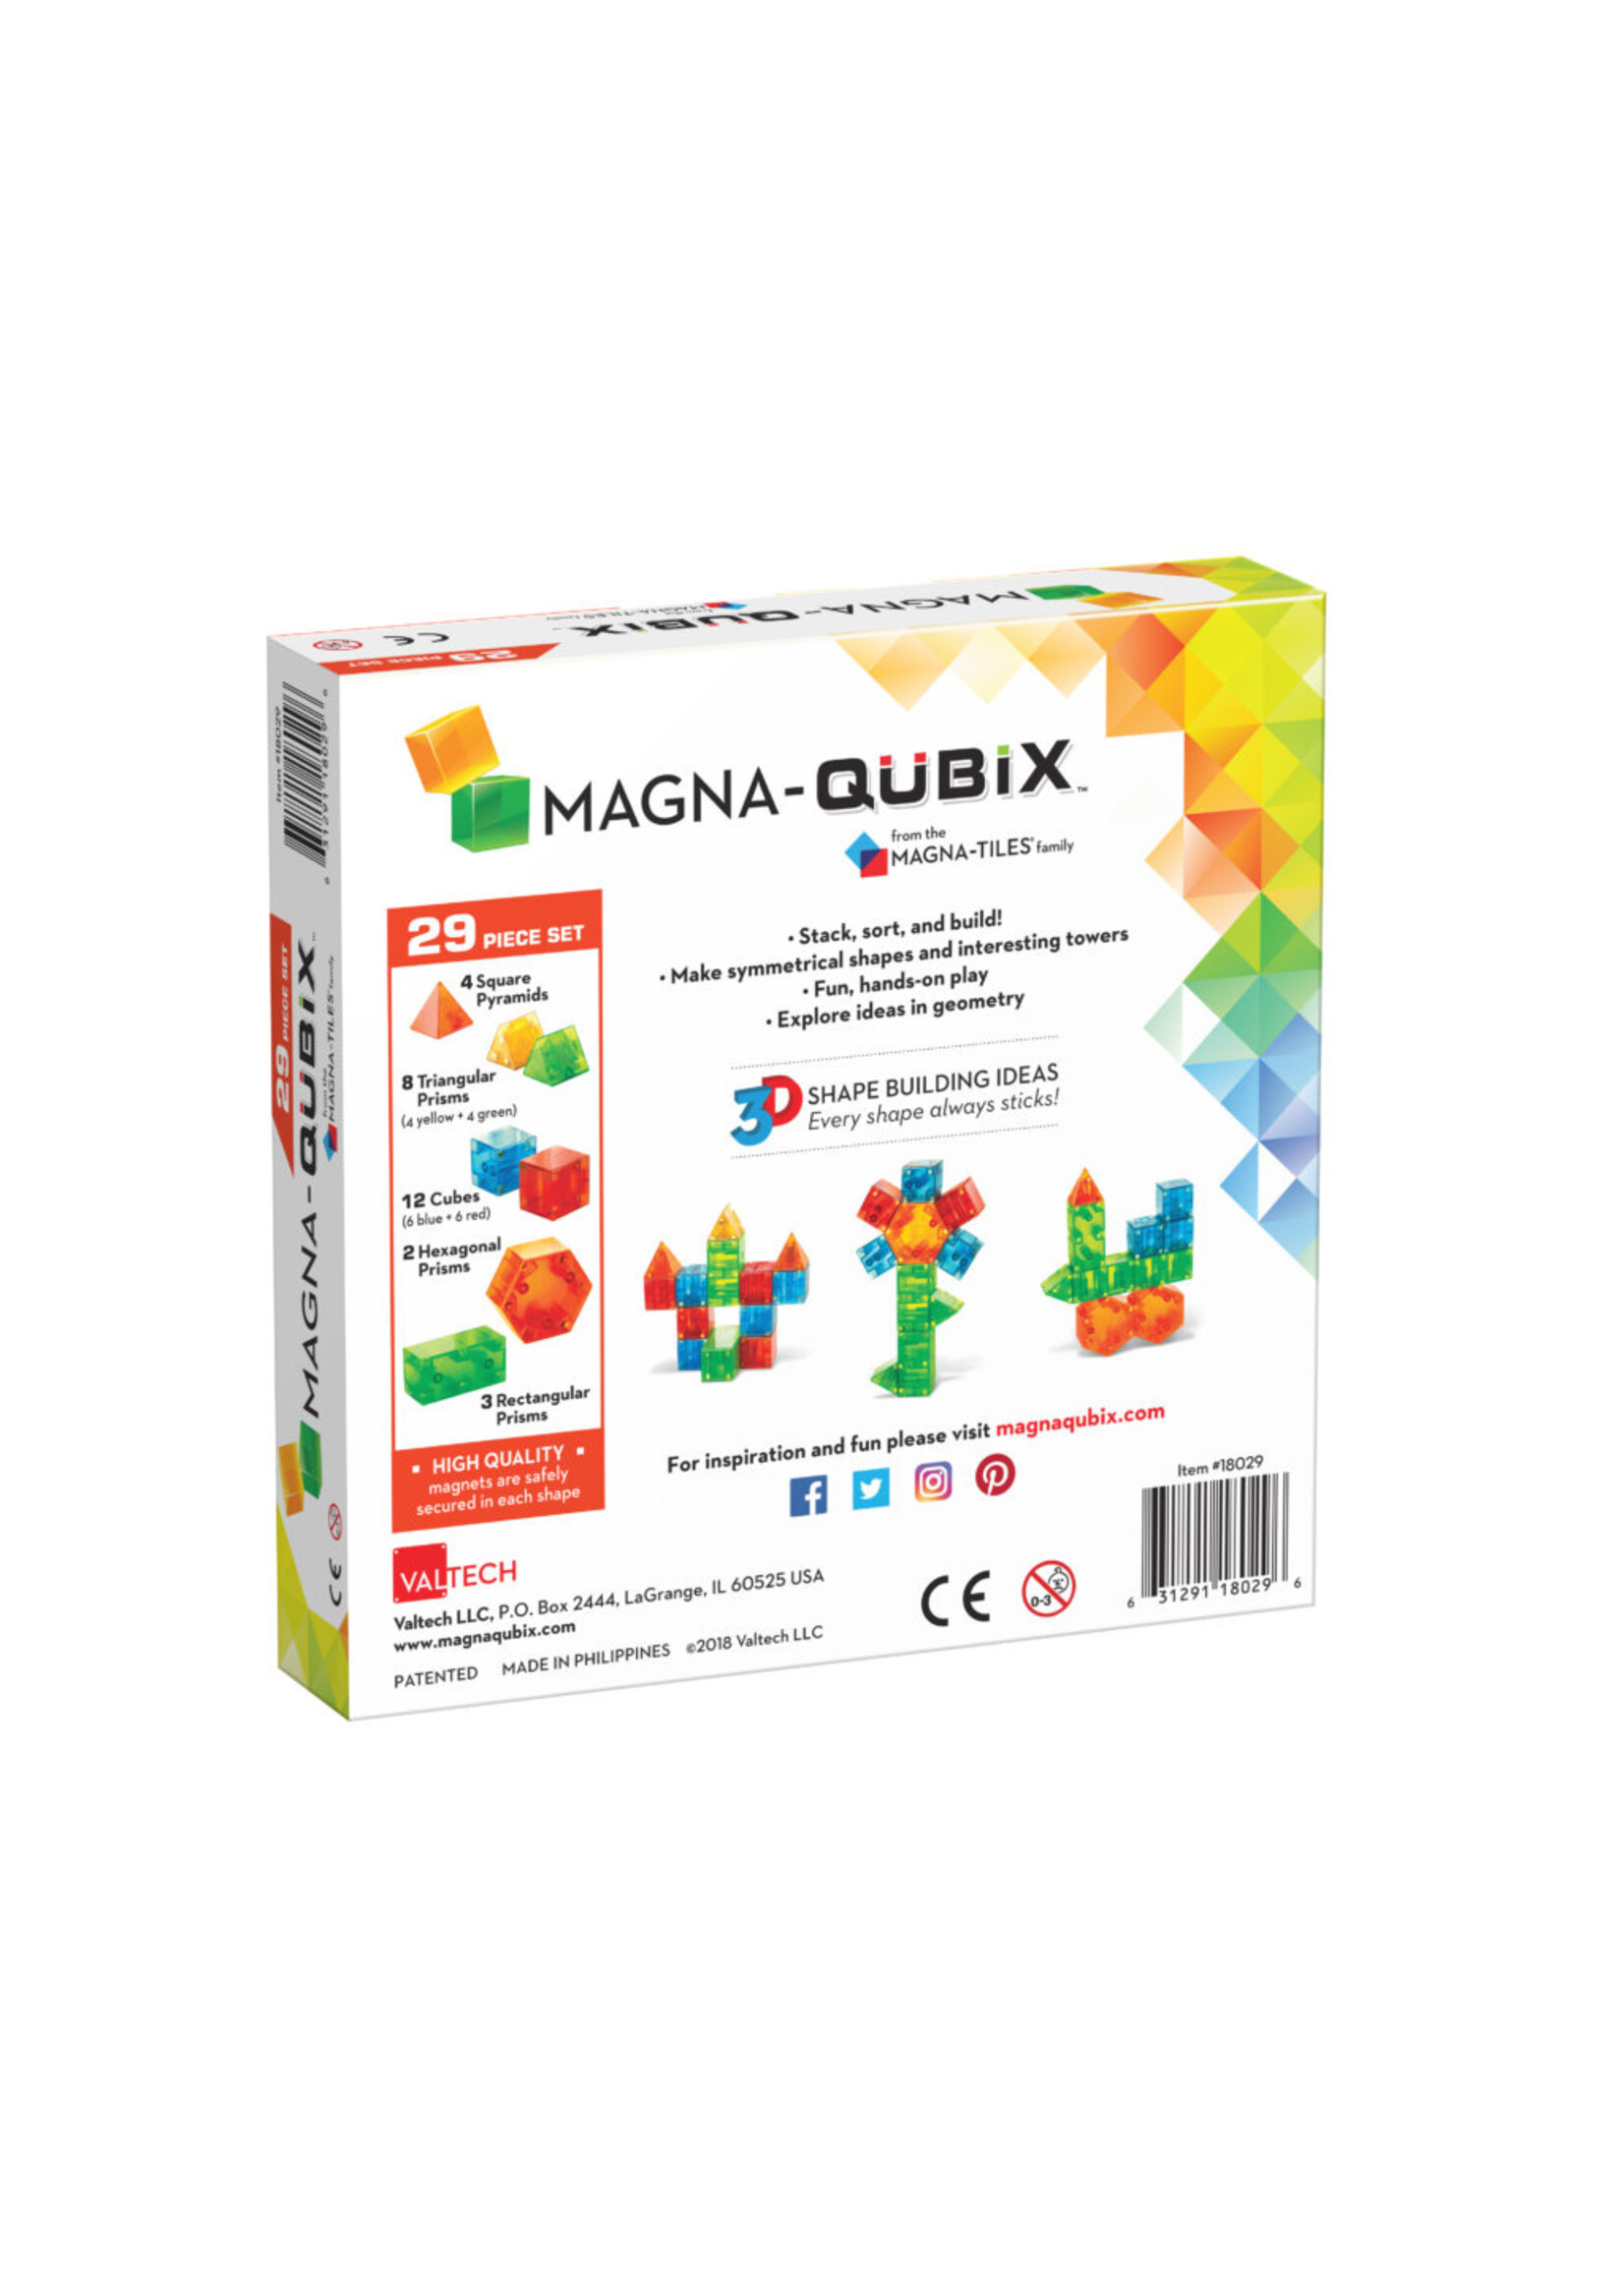 Magna-Tiles Magna-Qubix